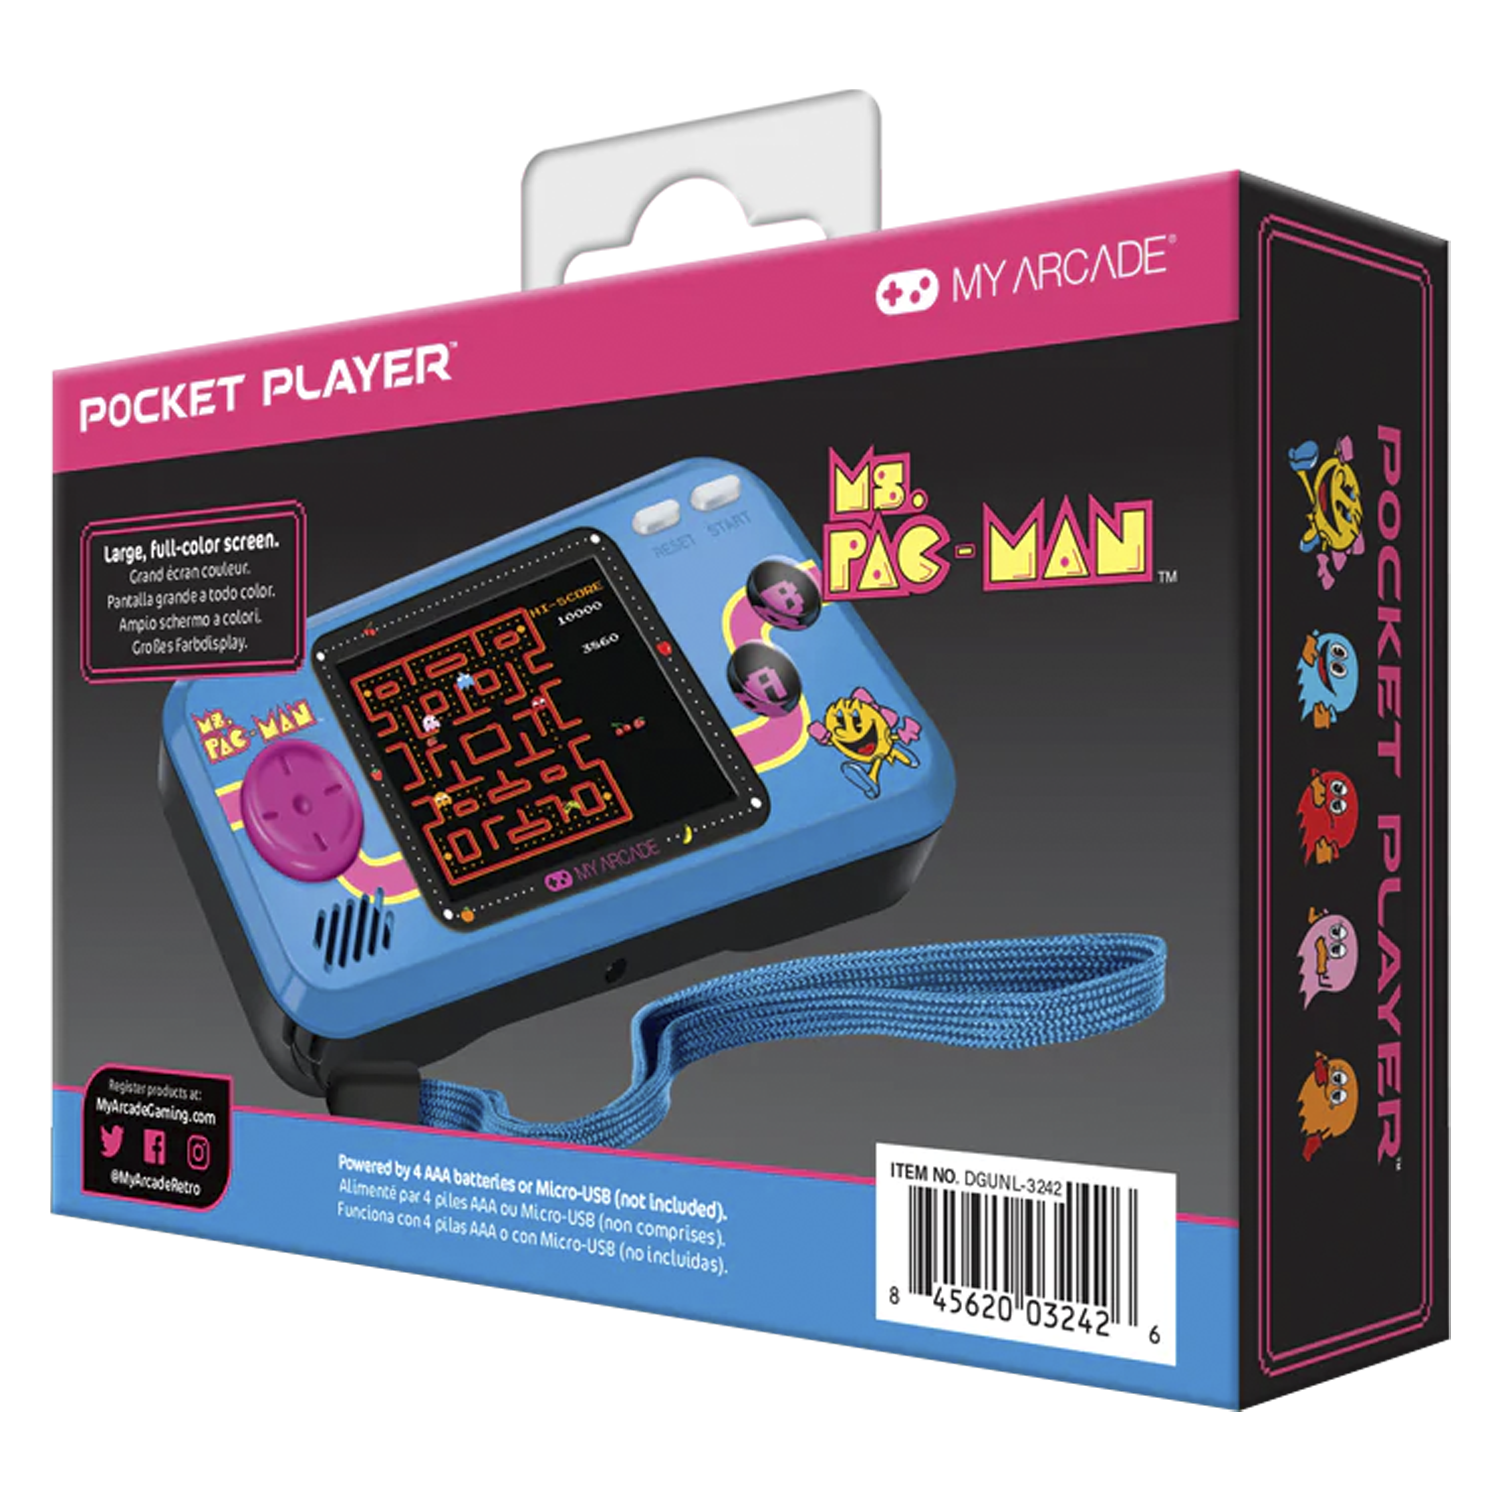 Console My Arcade MS Pacman Pocket Player (DGUNL-3242)